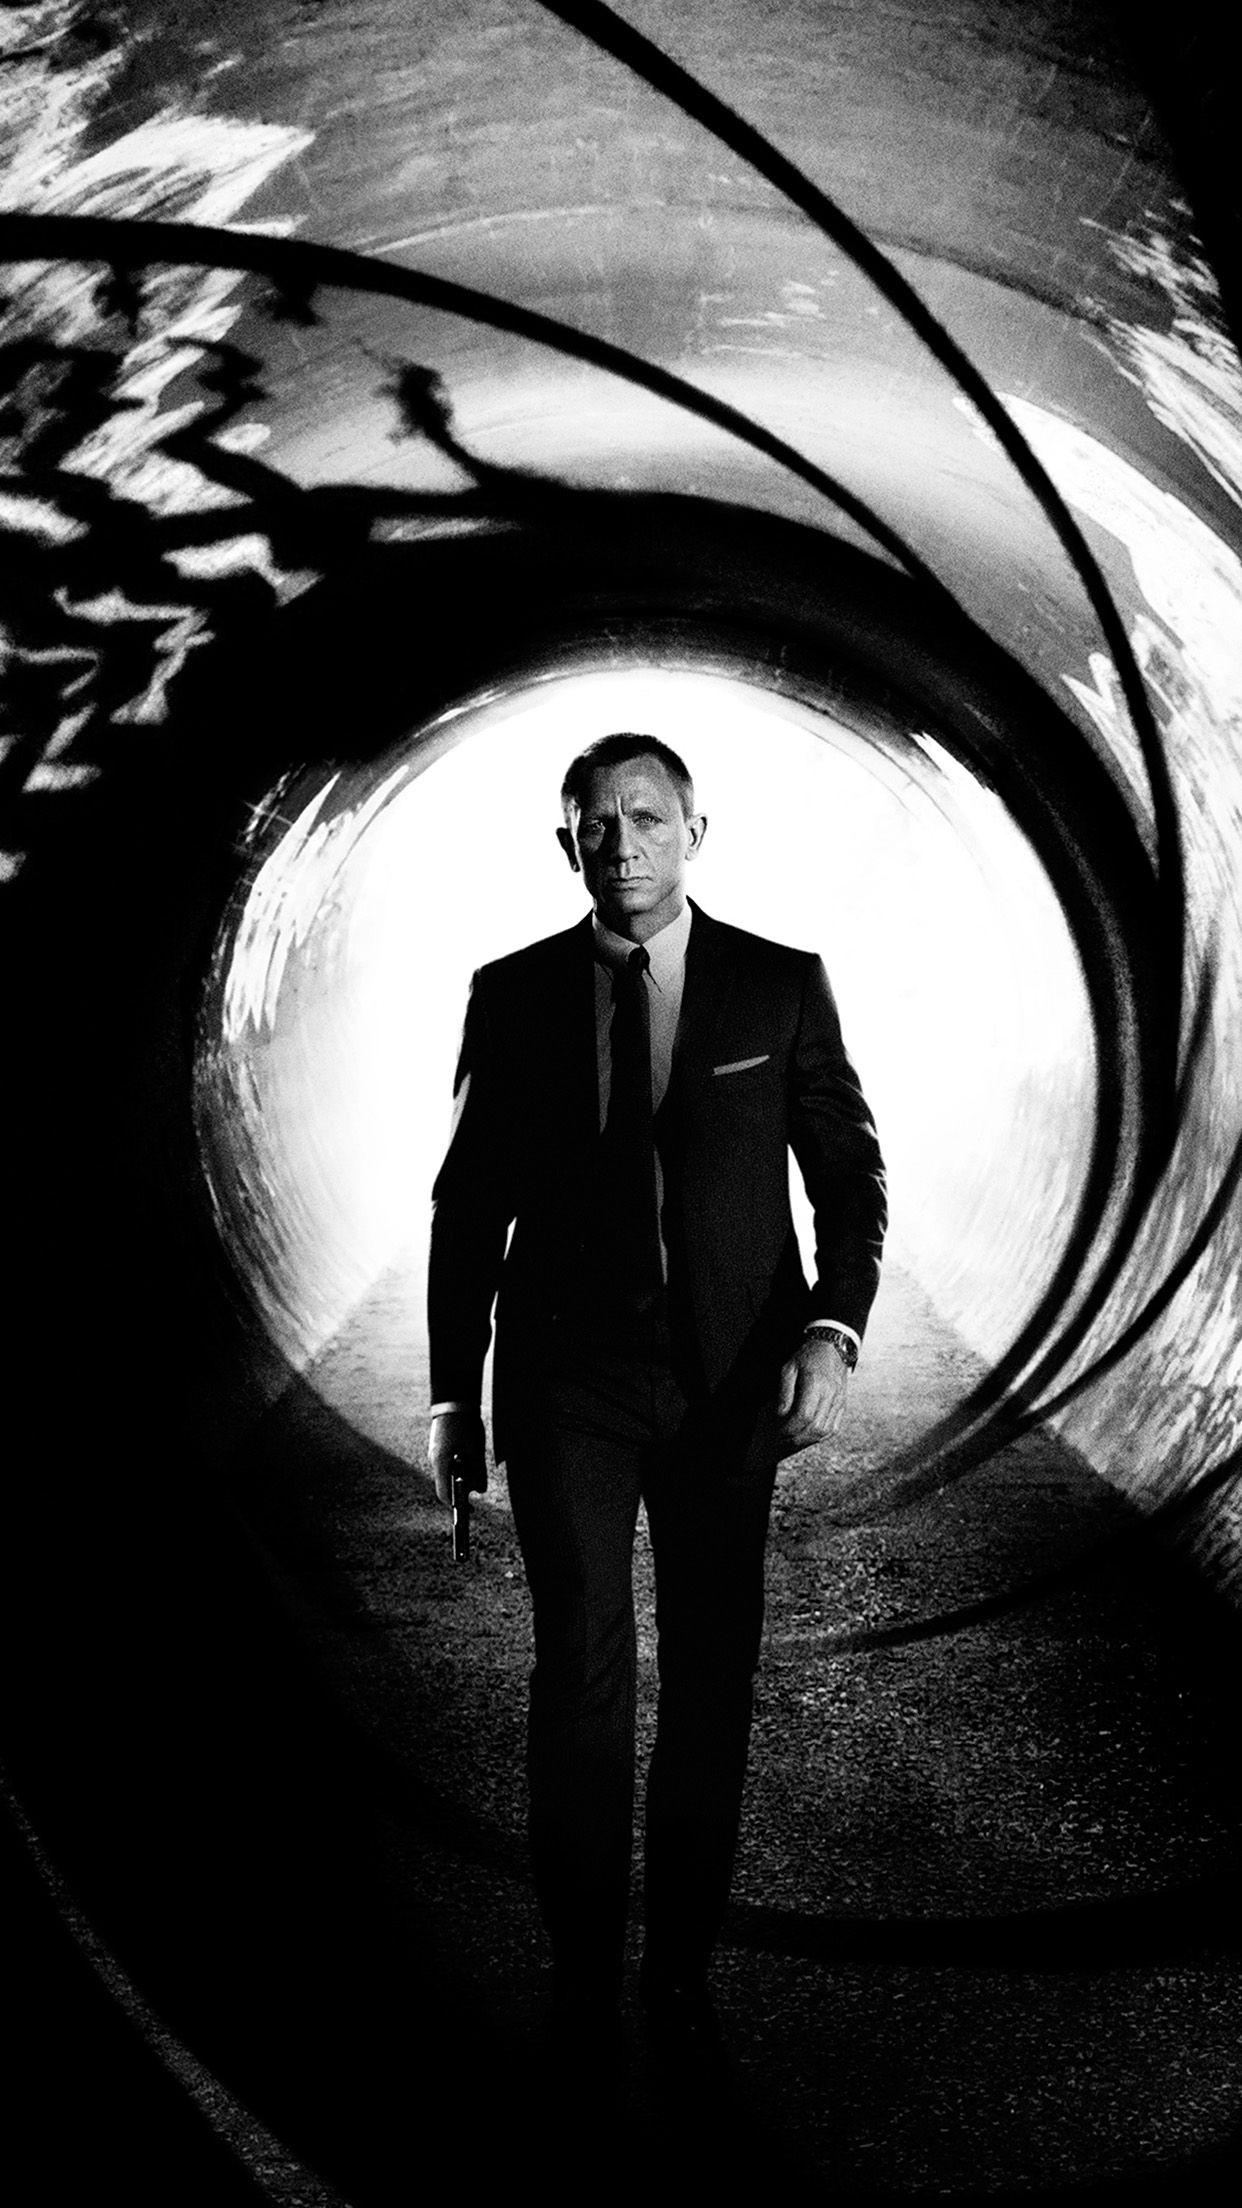 James Bond 007 Skyfall Film Poster Android wallpaper HD